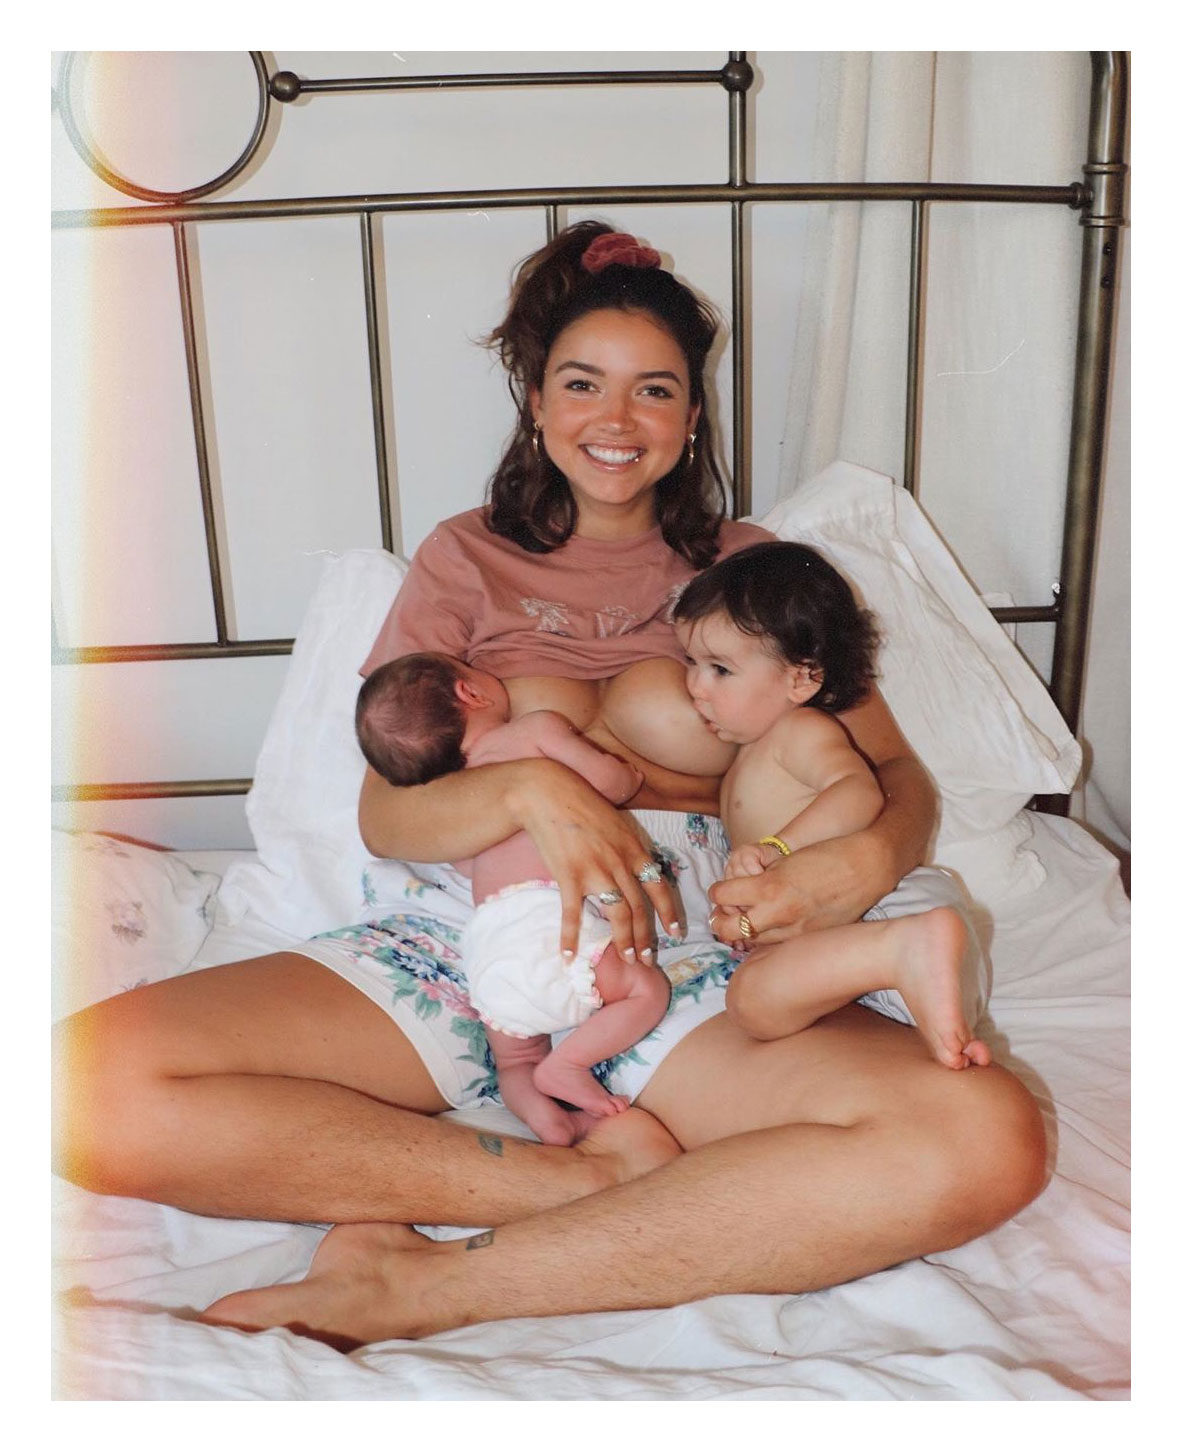 https://www.usmagazine.com/wp-content/uploads/2020/07/Bekah-Martinez-Nursing-Both-Kids-Breast-Feeding-Instagram.jpg?quality=86&strip=all